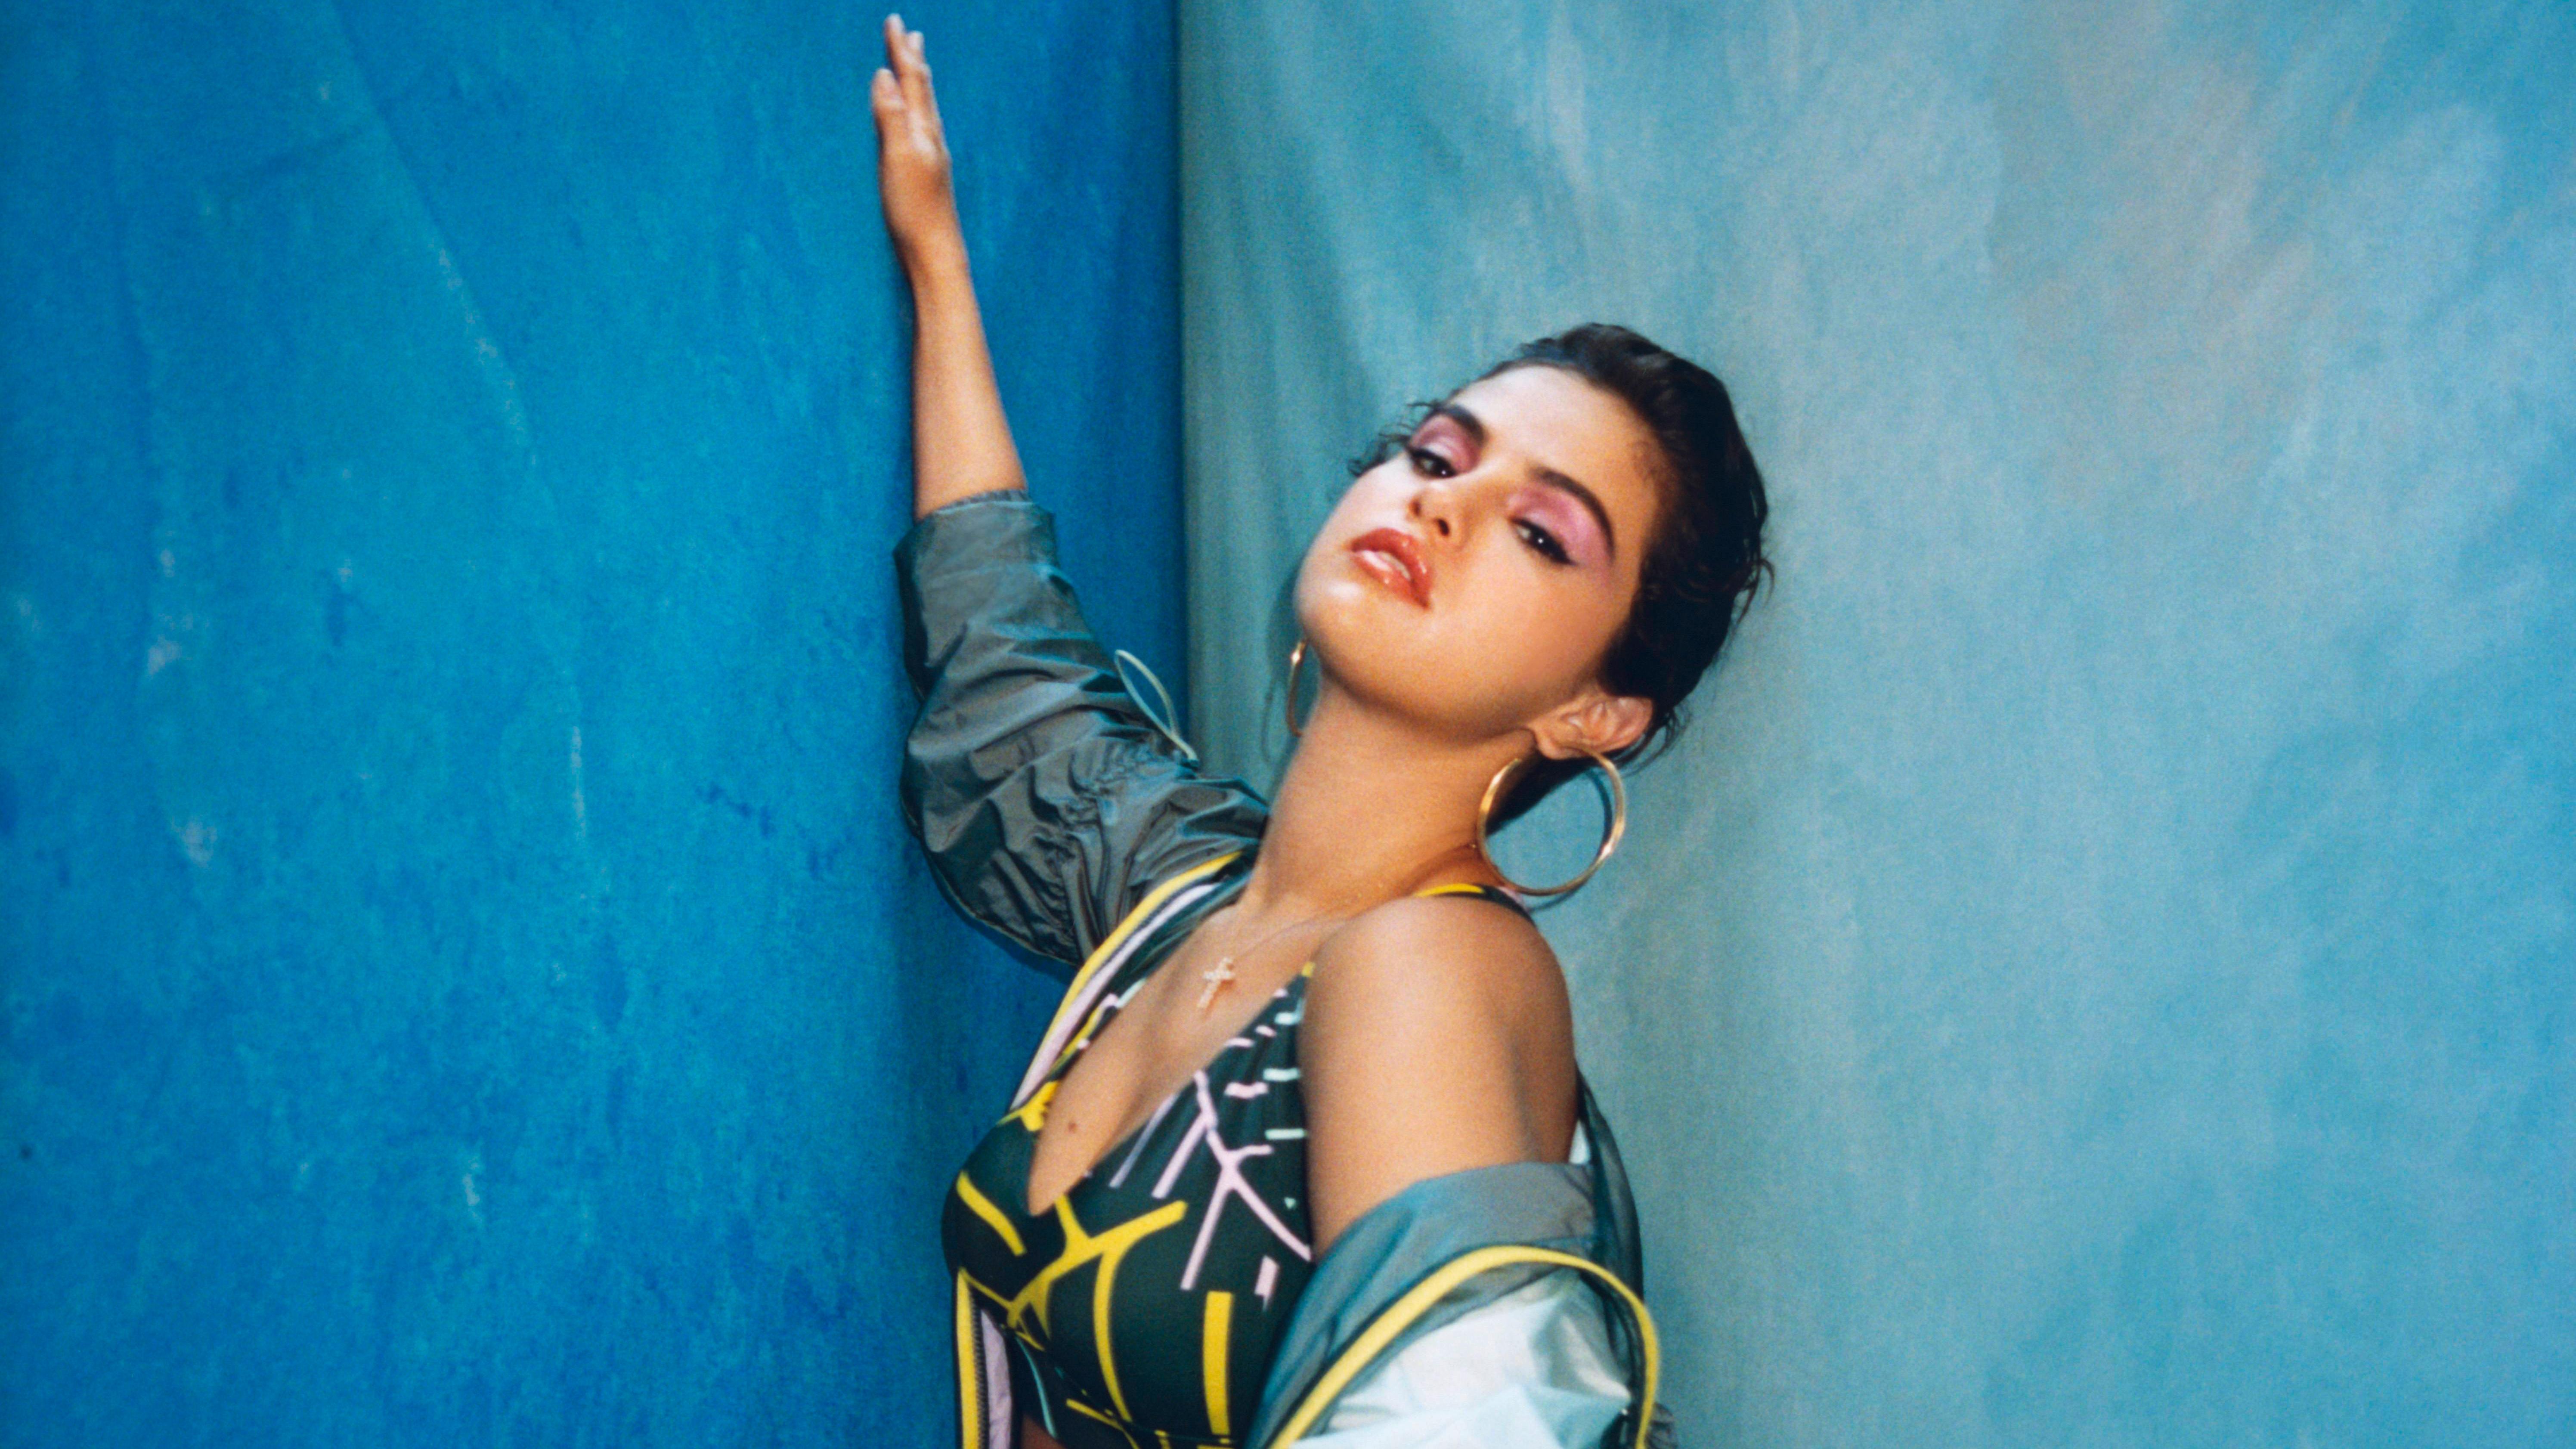 Selena Gomez Puma 2019 5k, HD Music, 4k Wallpaper, Image